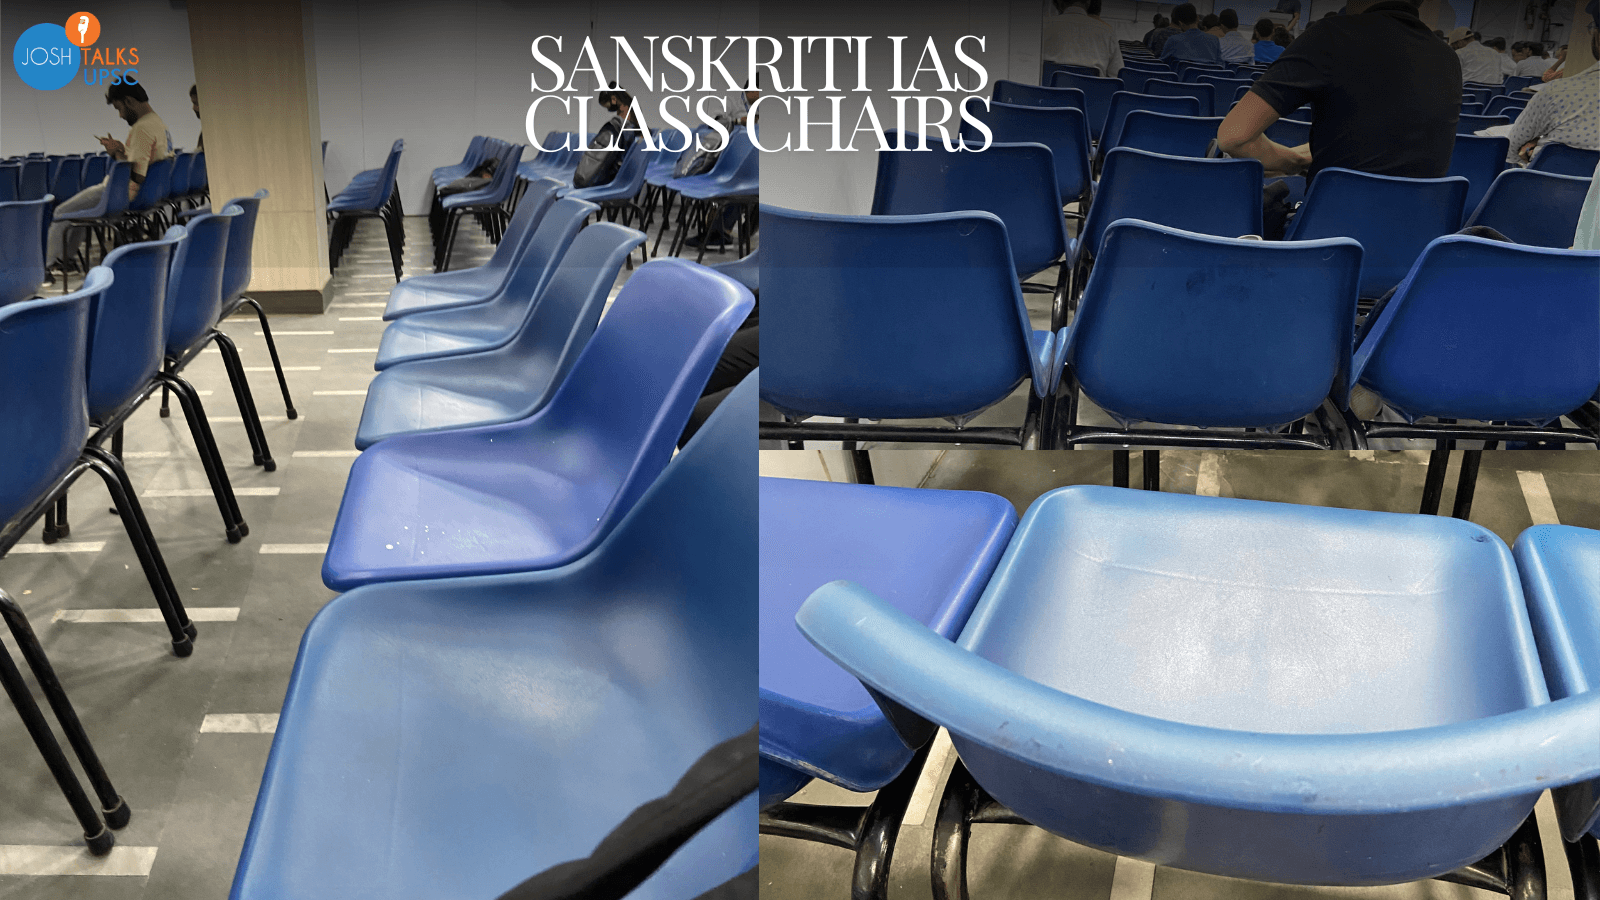 Chairs at Sanskriti IAS classes